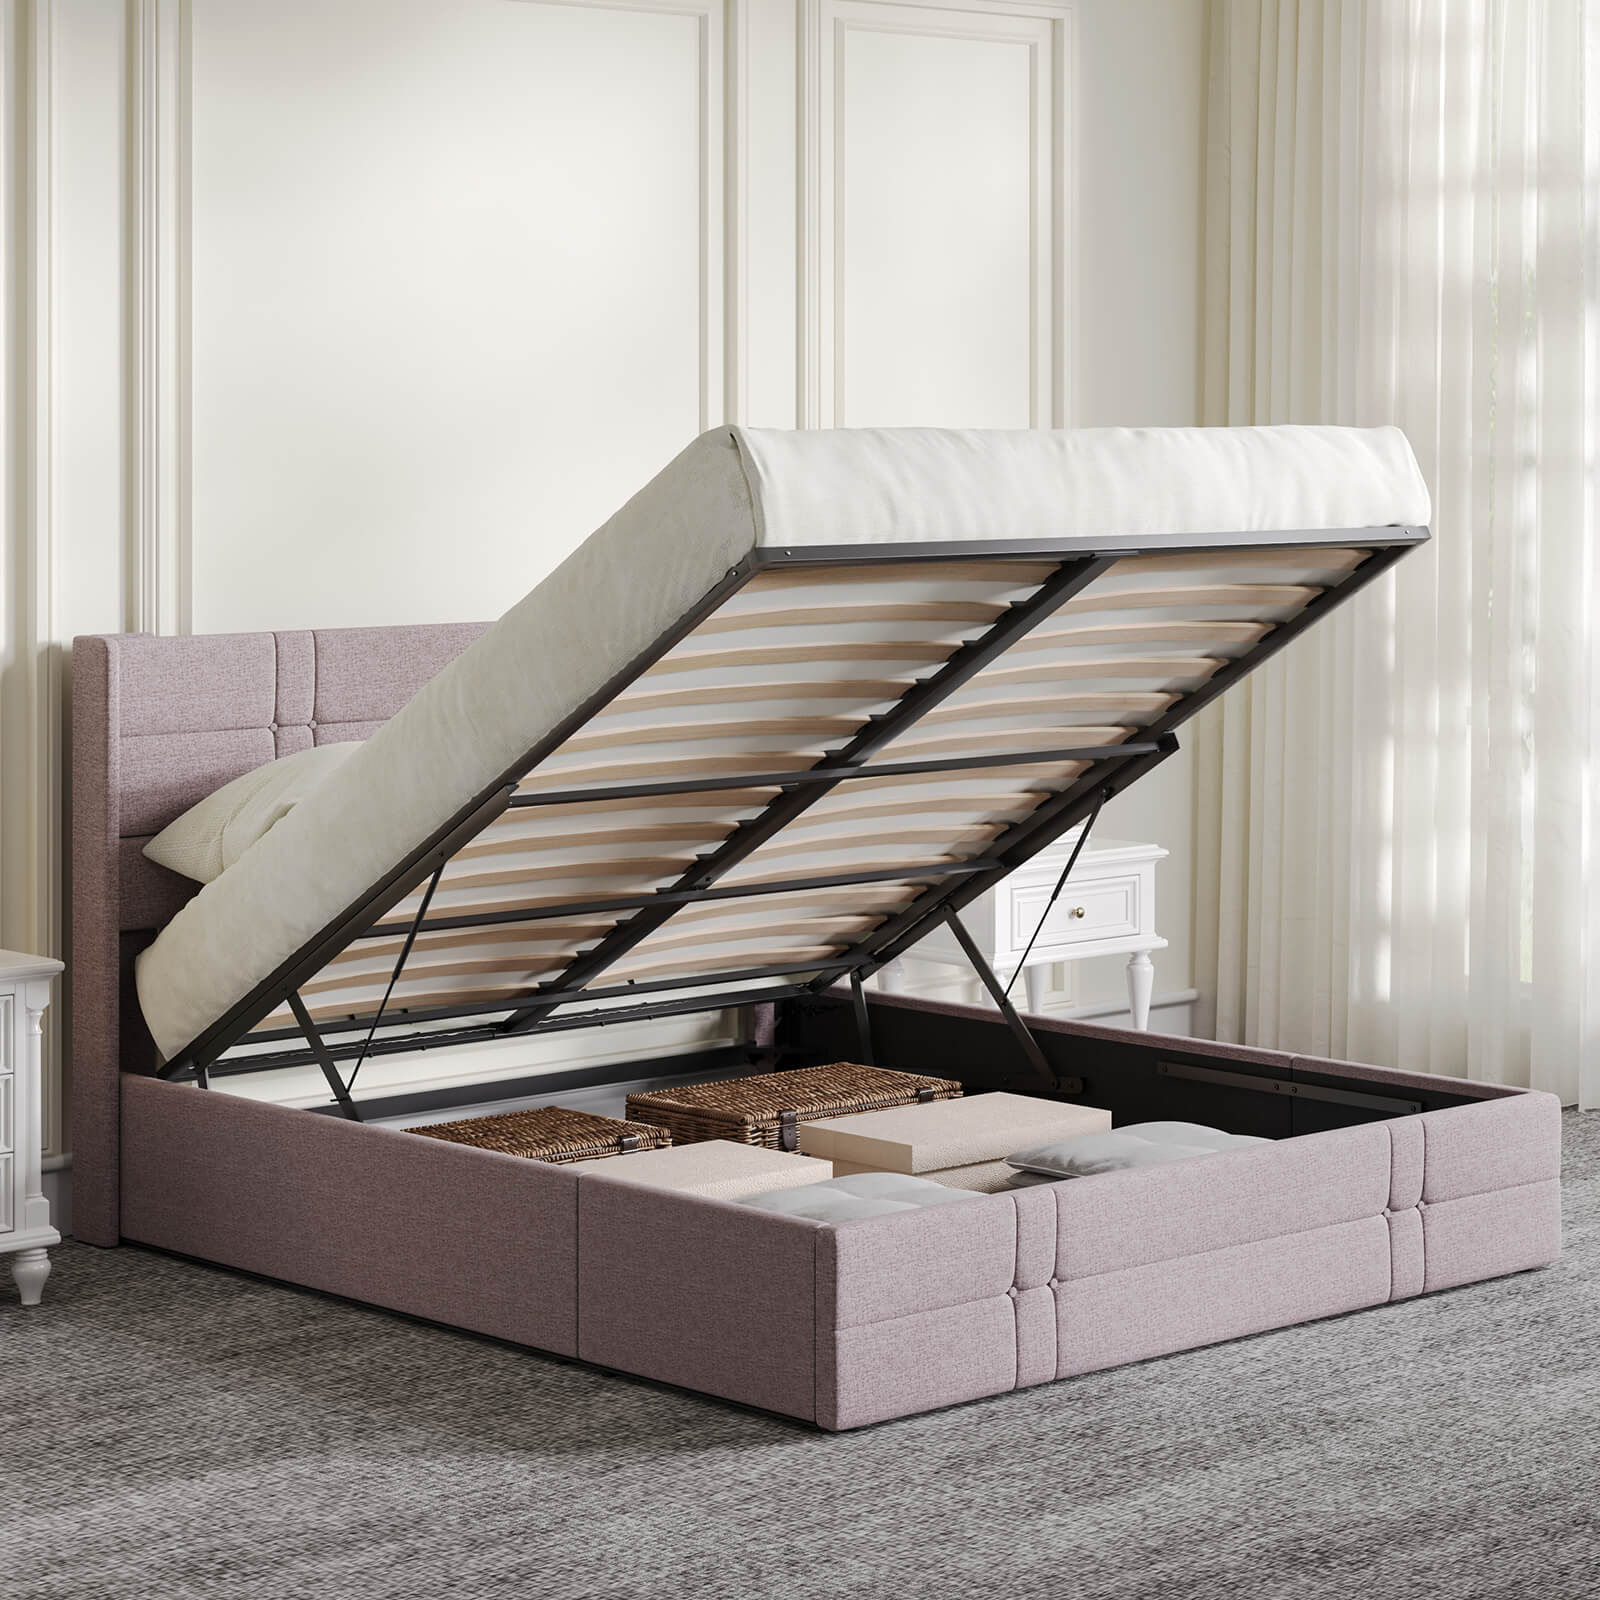 Novilla Robust Bed Frame with Lift Storage